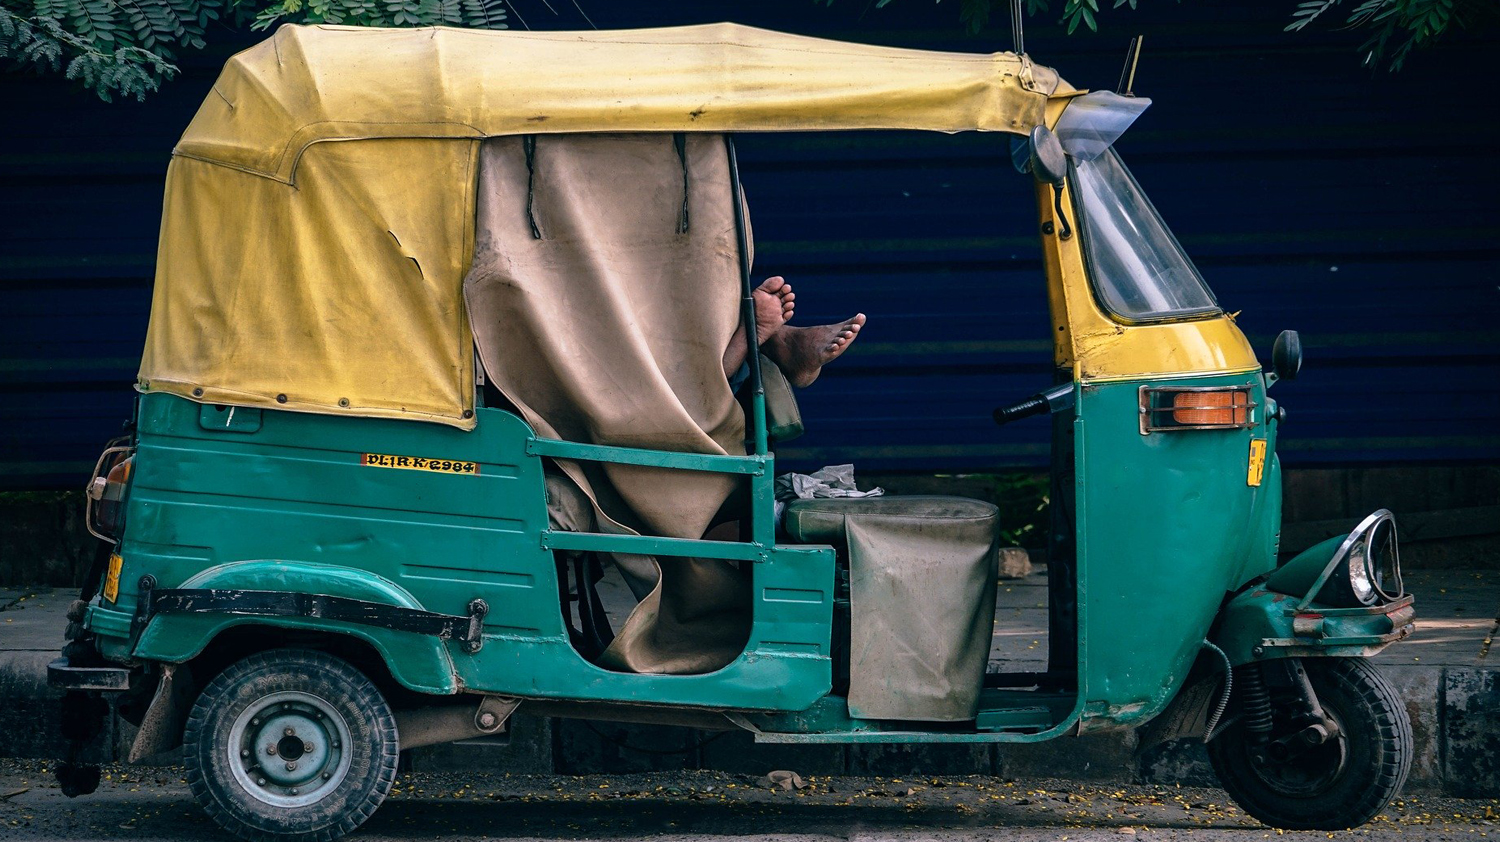 Tuktuk hire, a unique way to travel around Sri Lanka